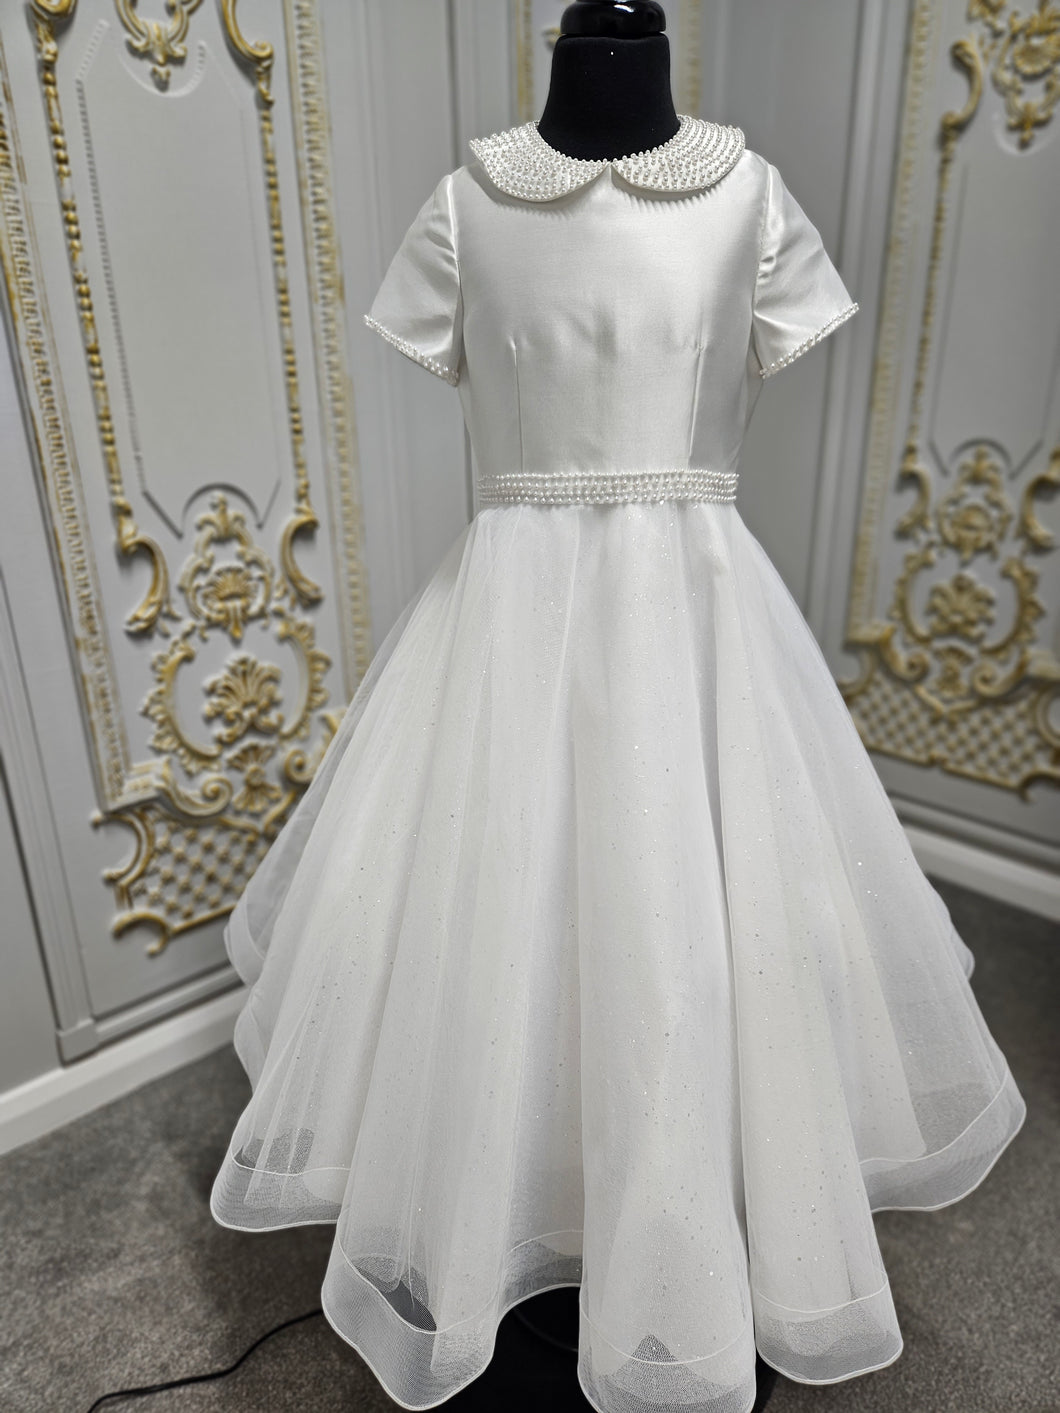 SALE Isabella Girls White Communion Dress:- IS24696